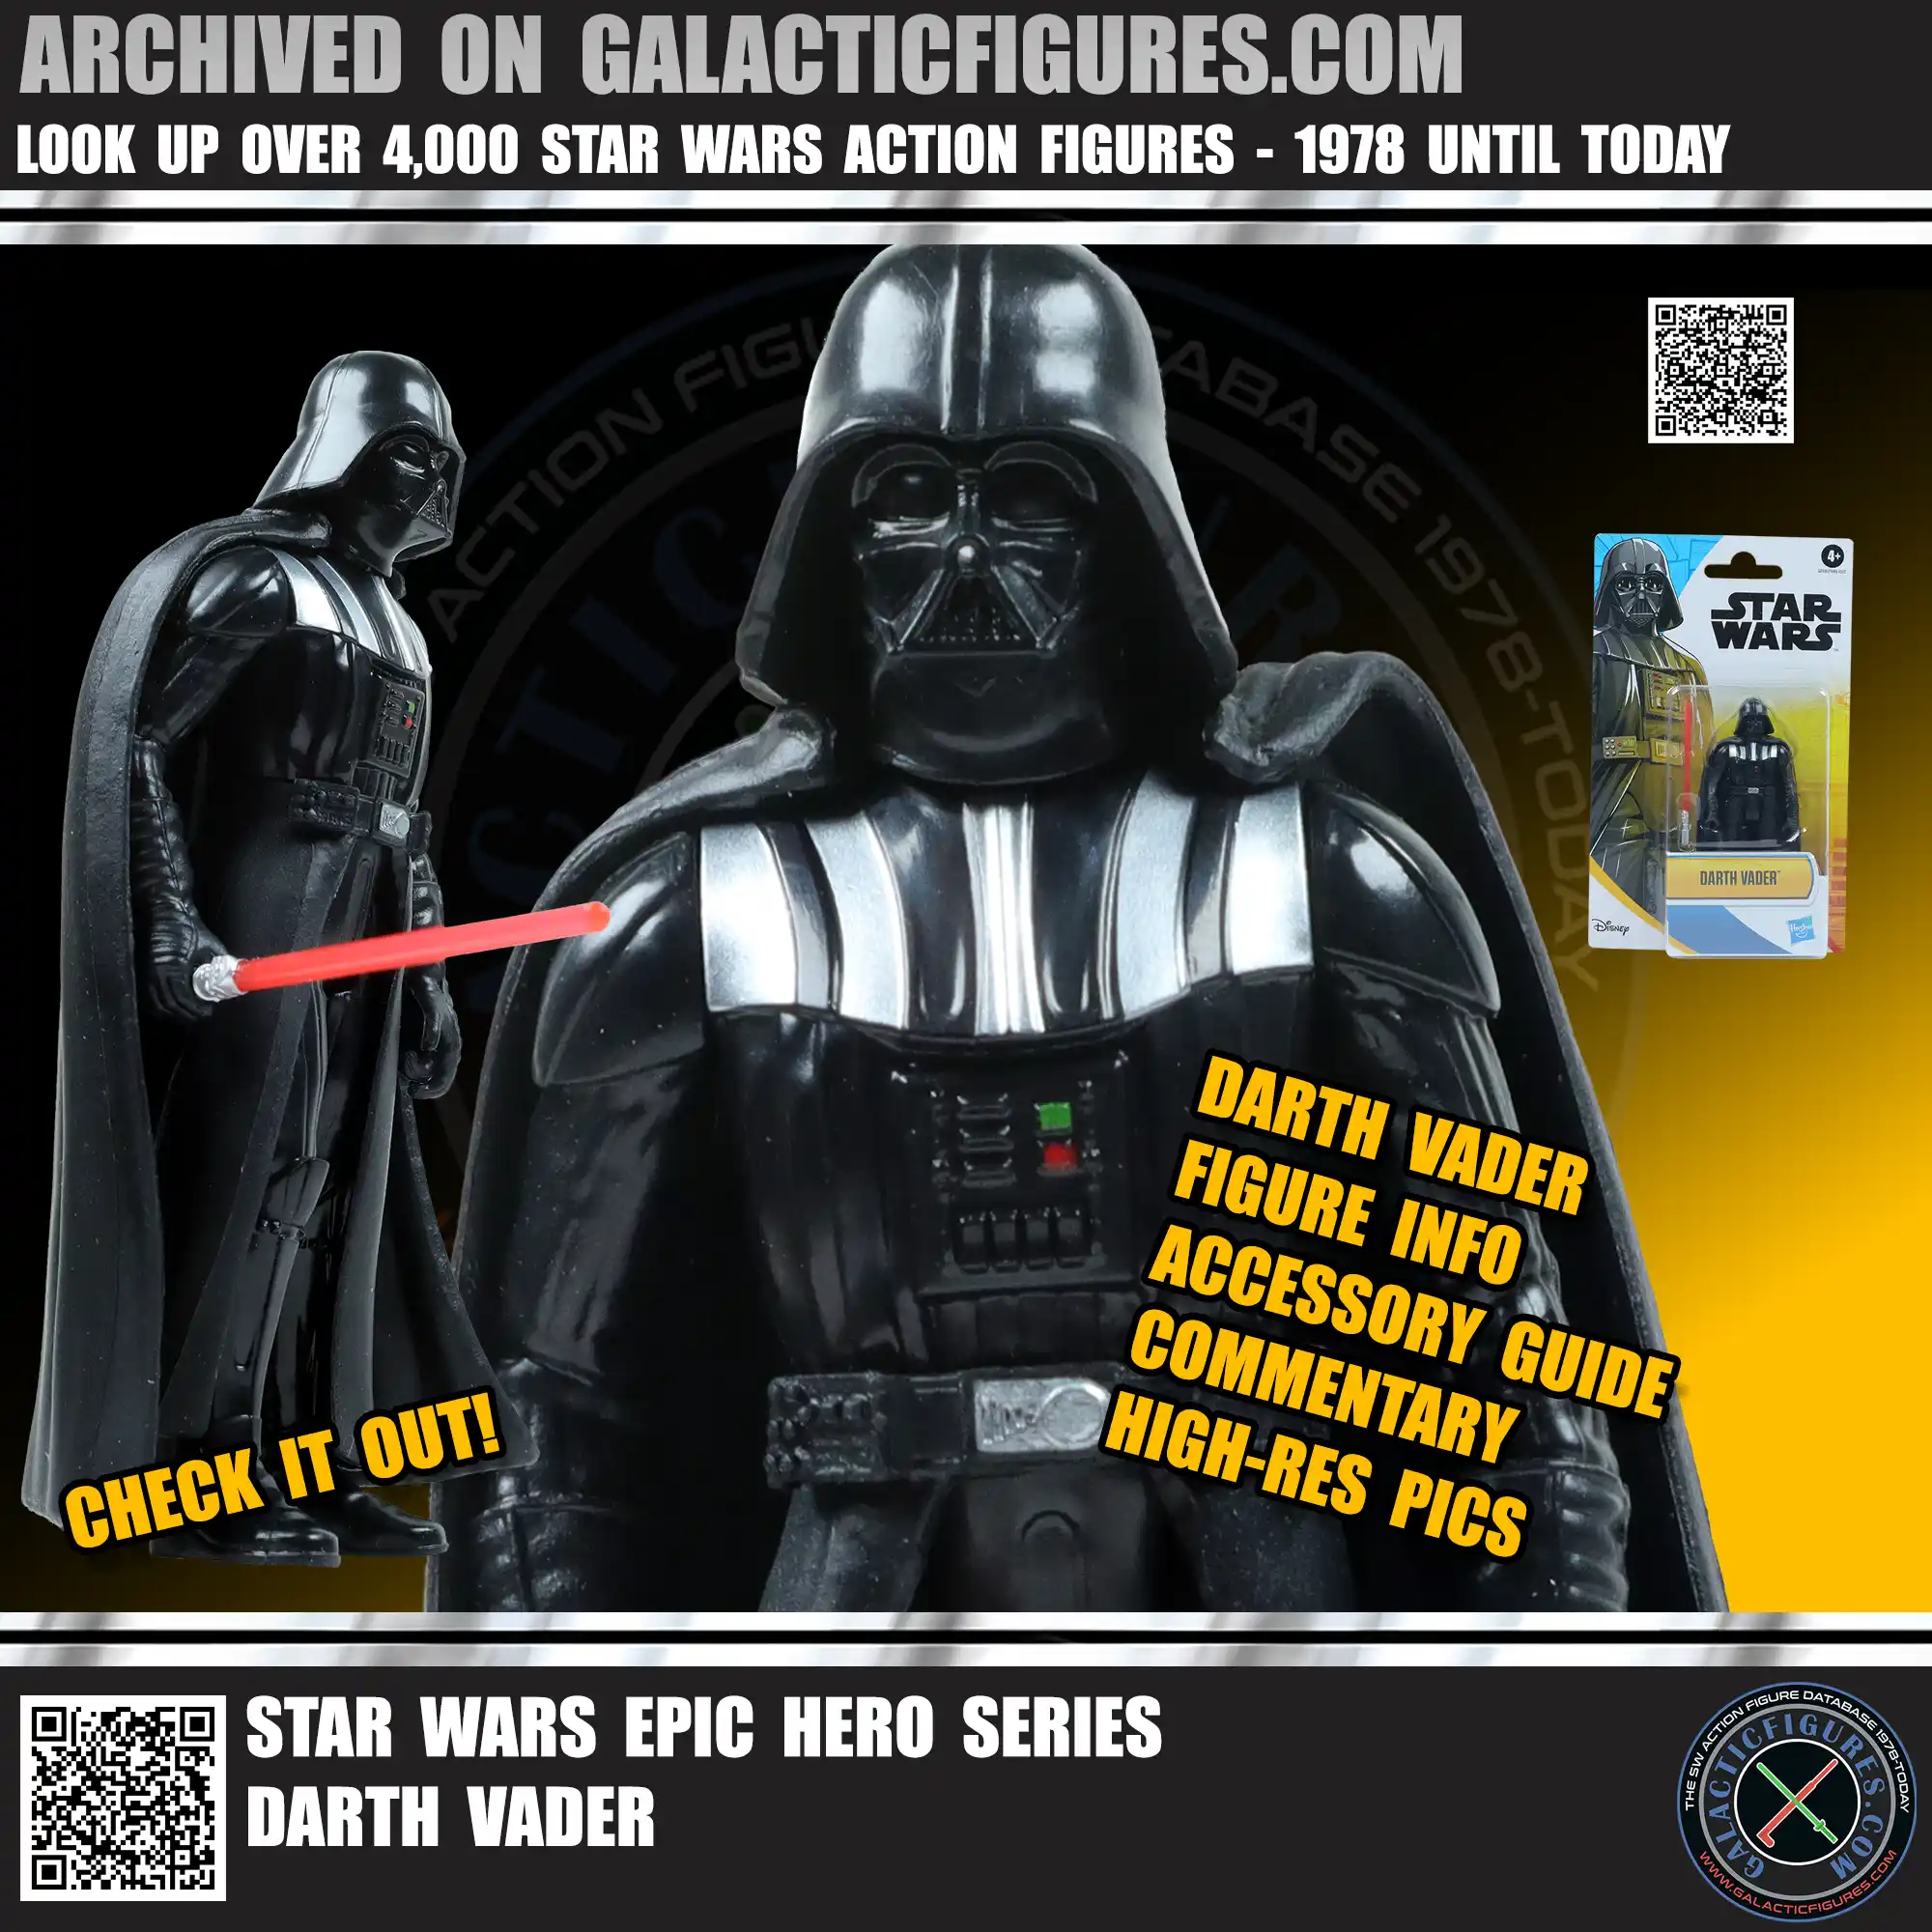 Epic Hero Series Darth Vader Added